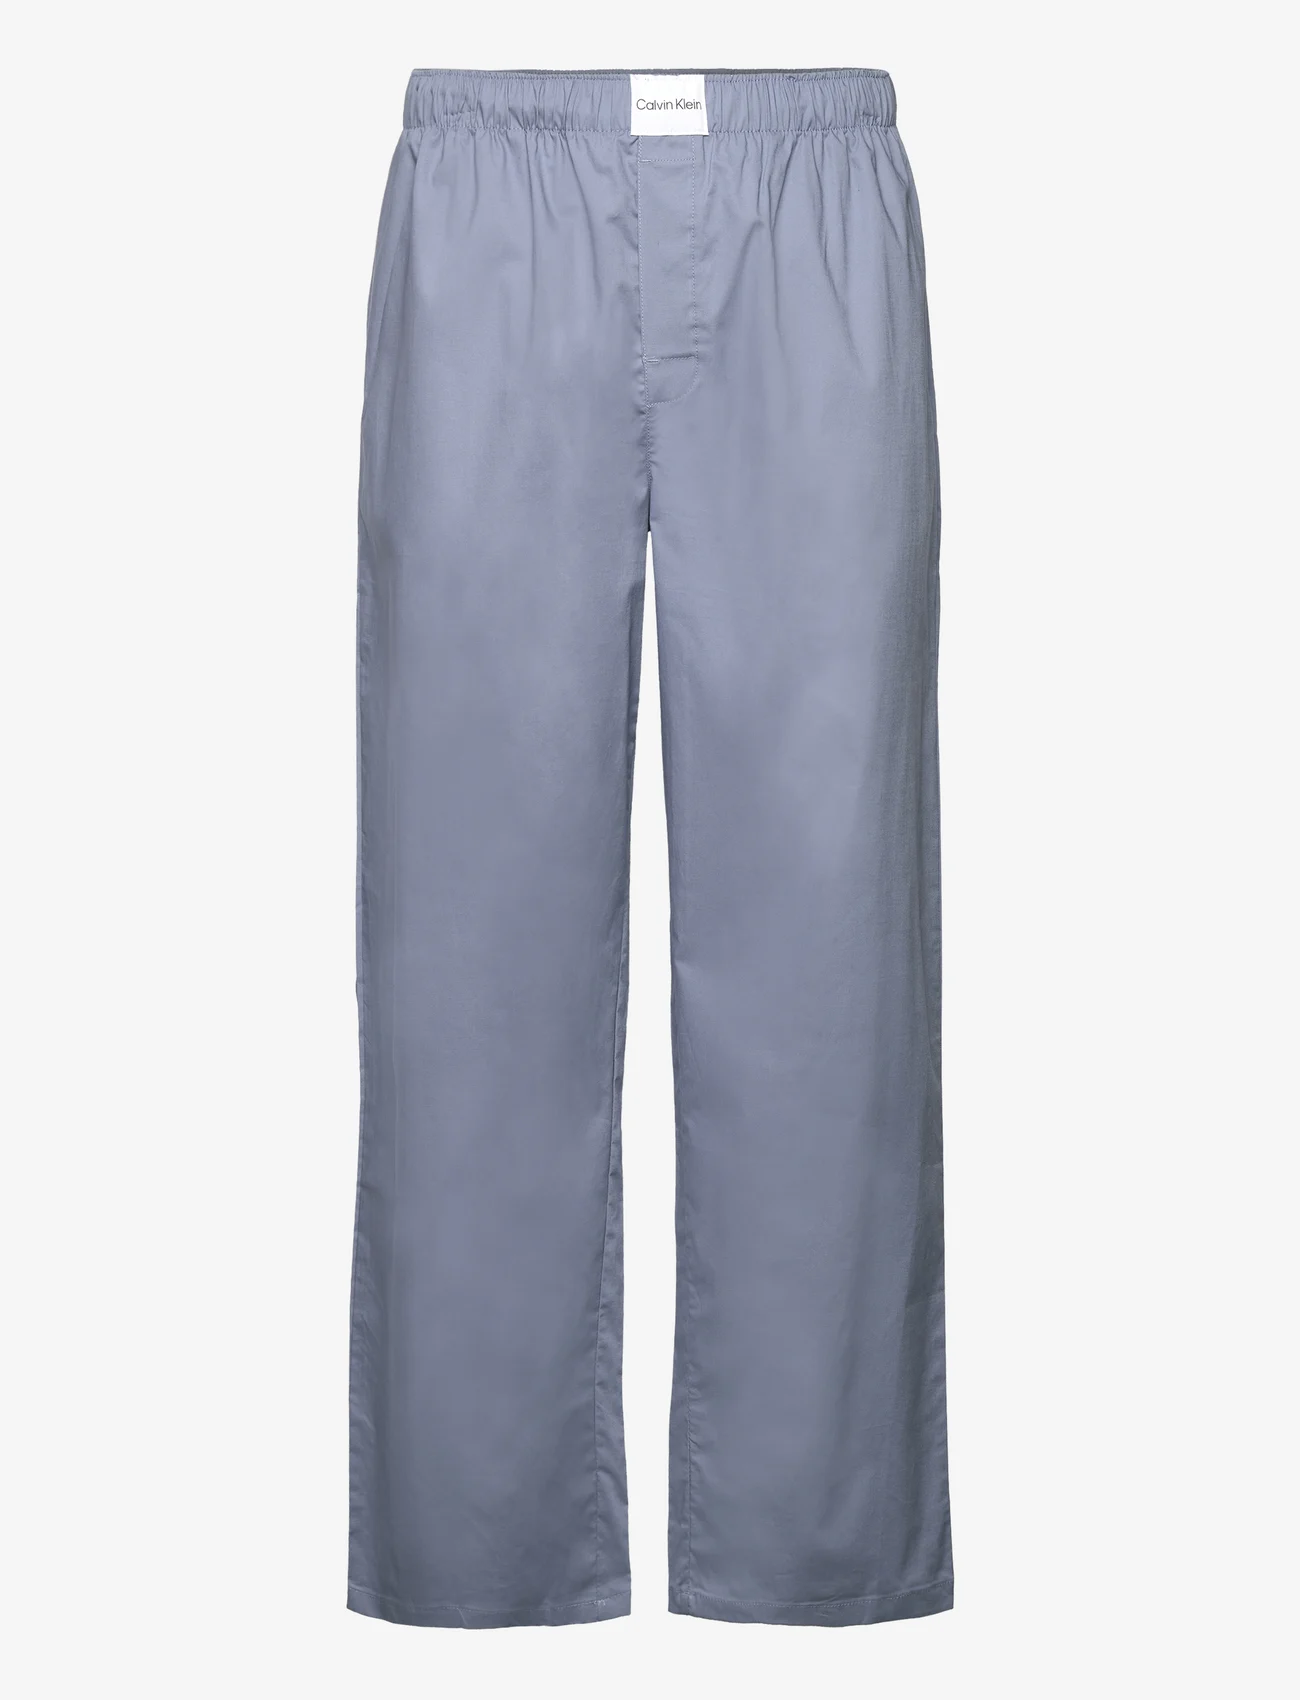 Calvin Klein - SLEEP PANT - pidžamas bikses - flint stone - 0